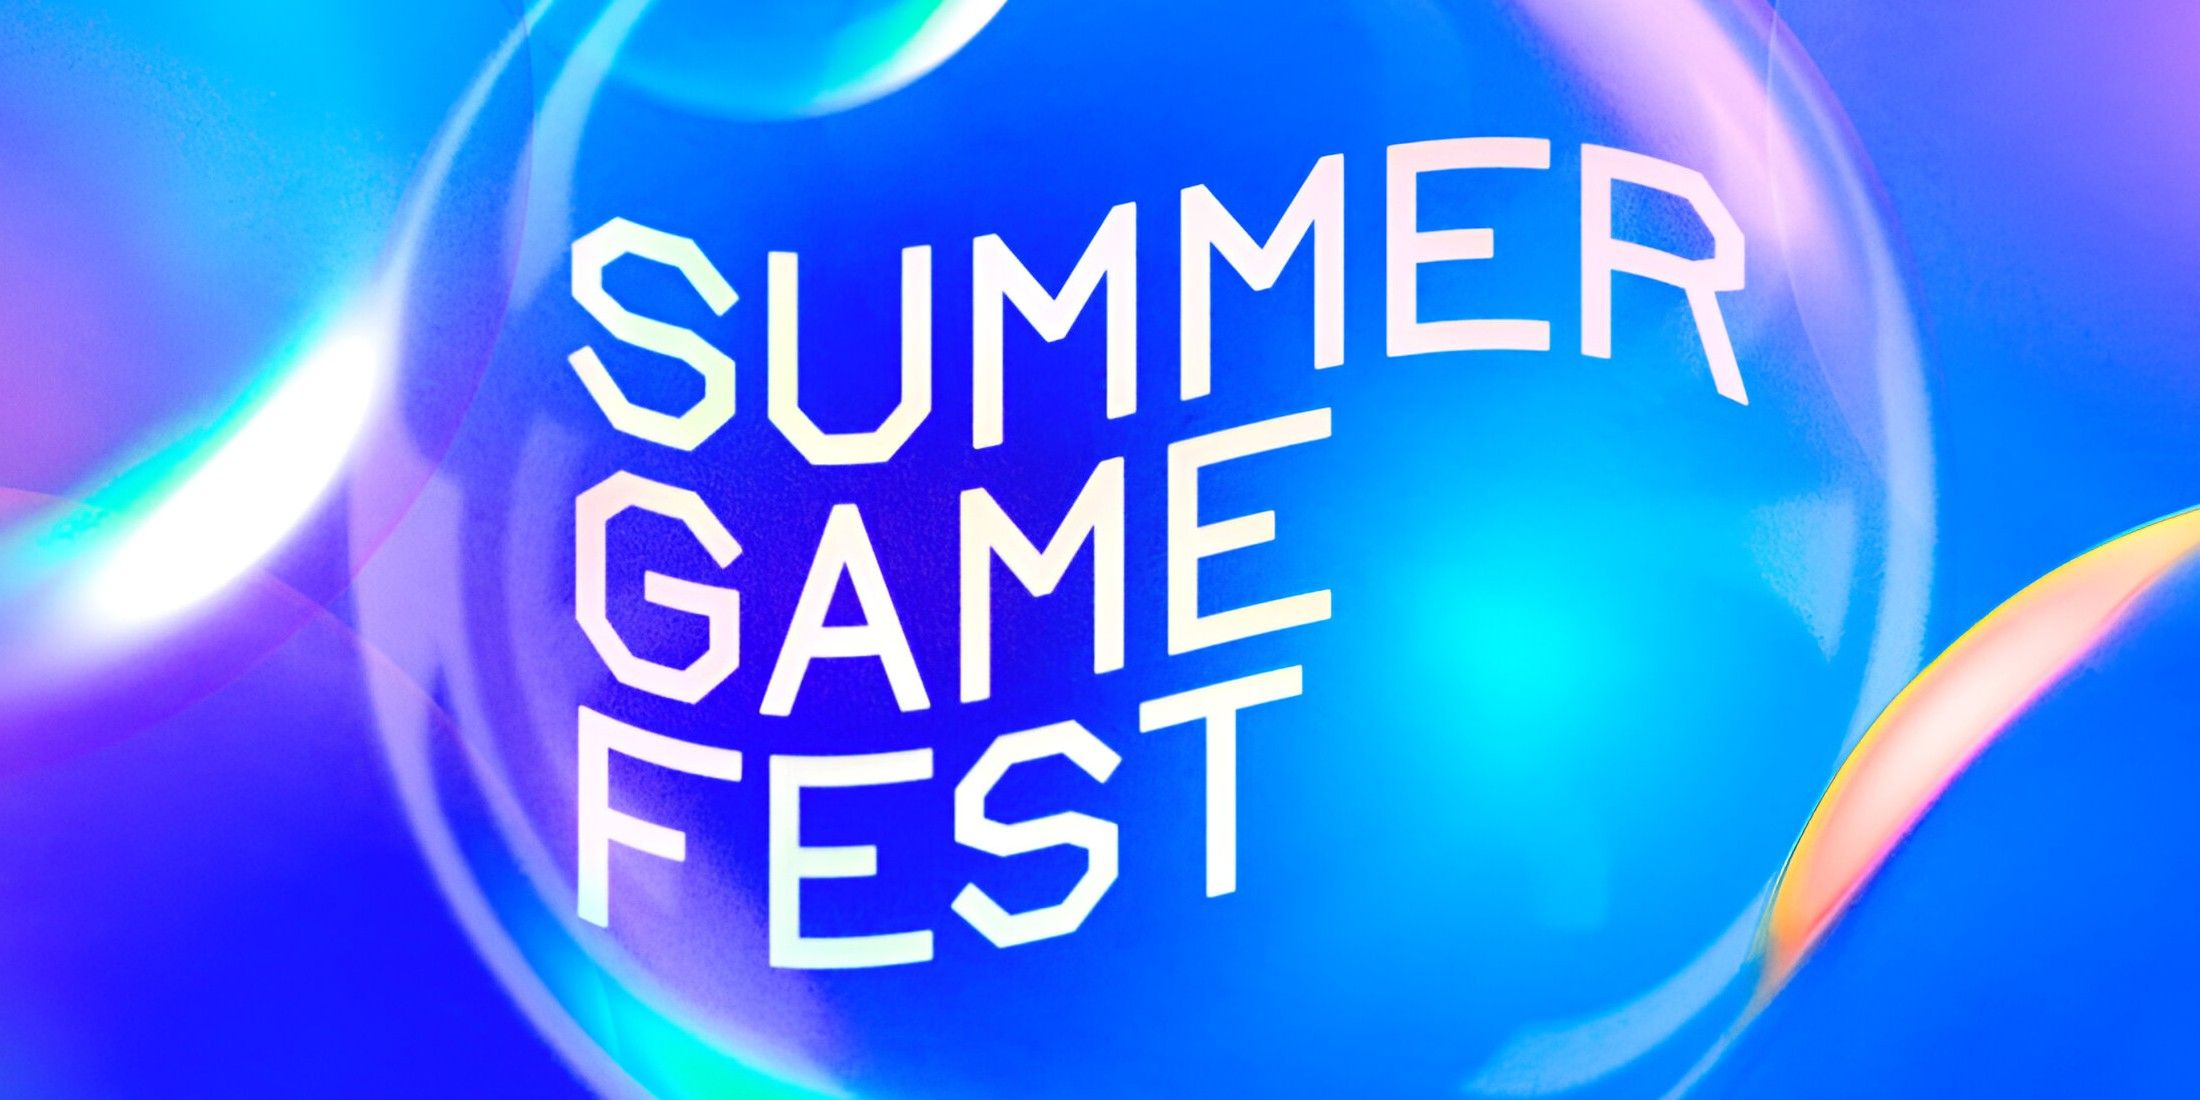 summer game fest official promo art